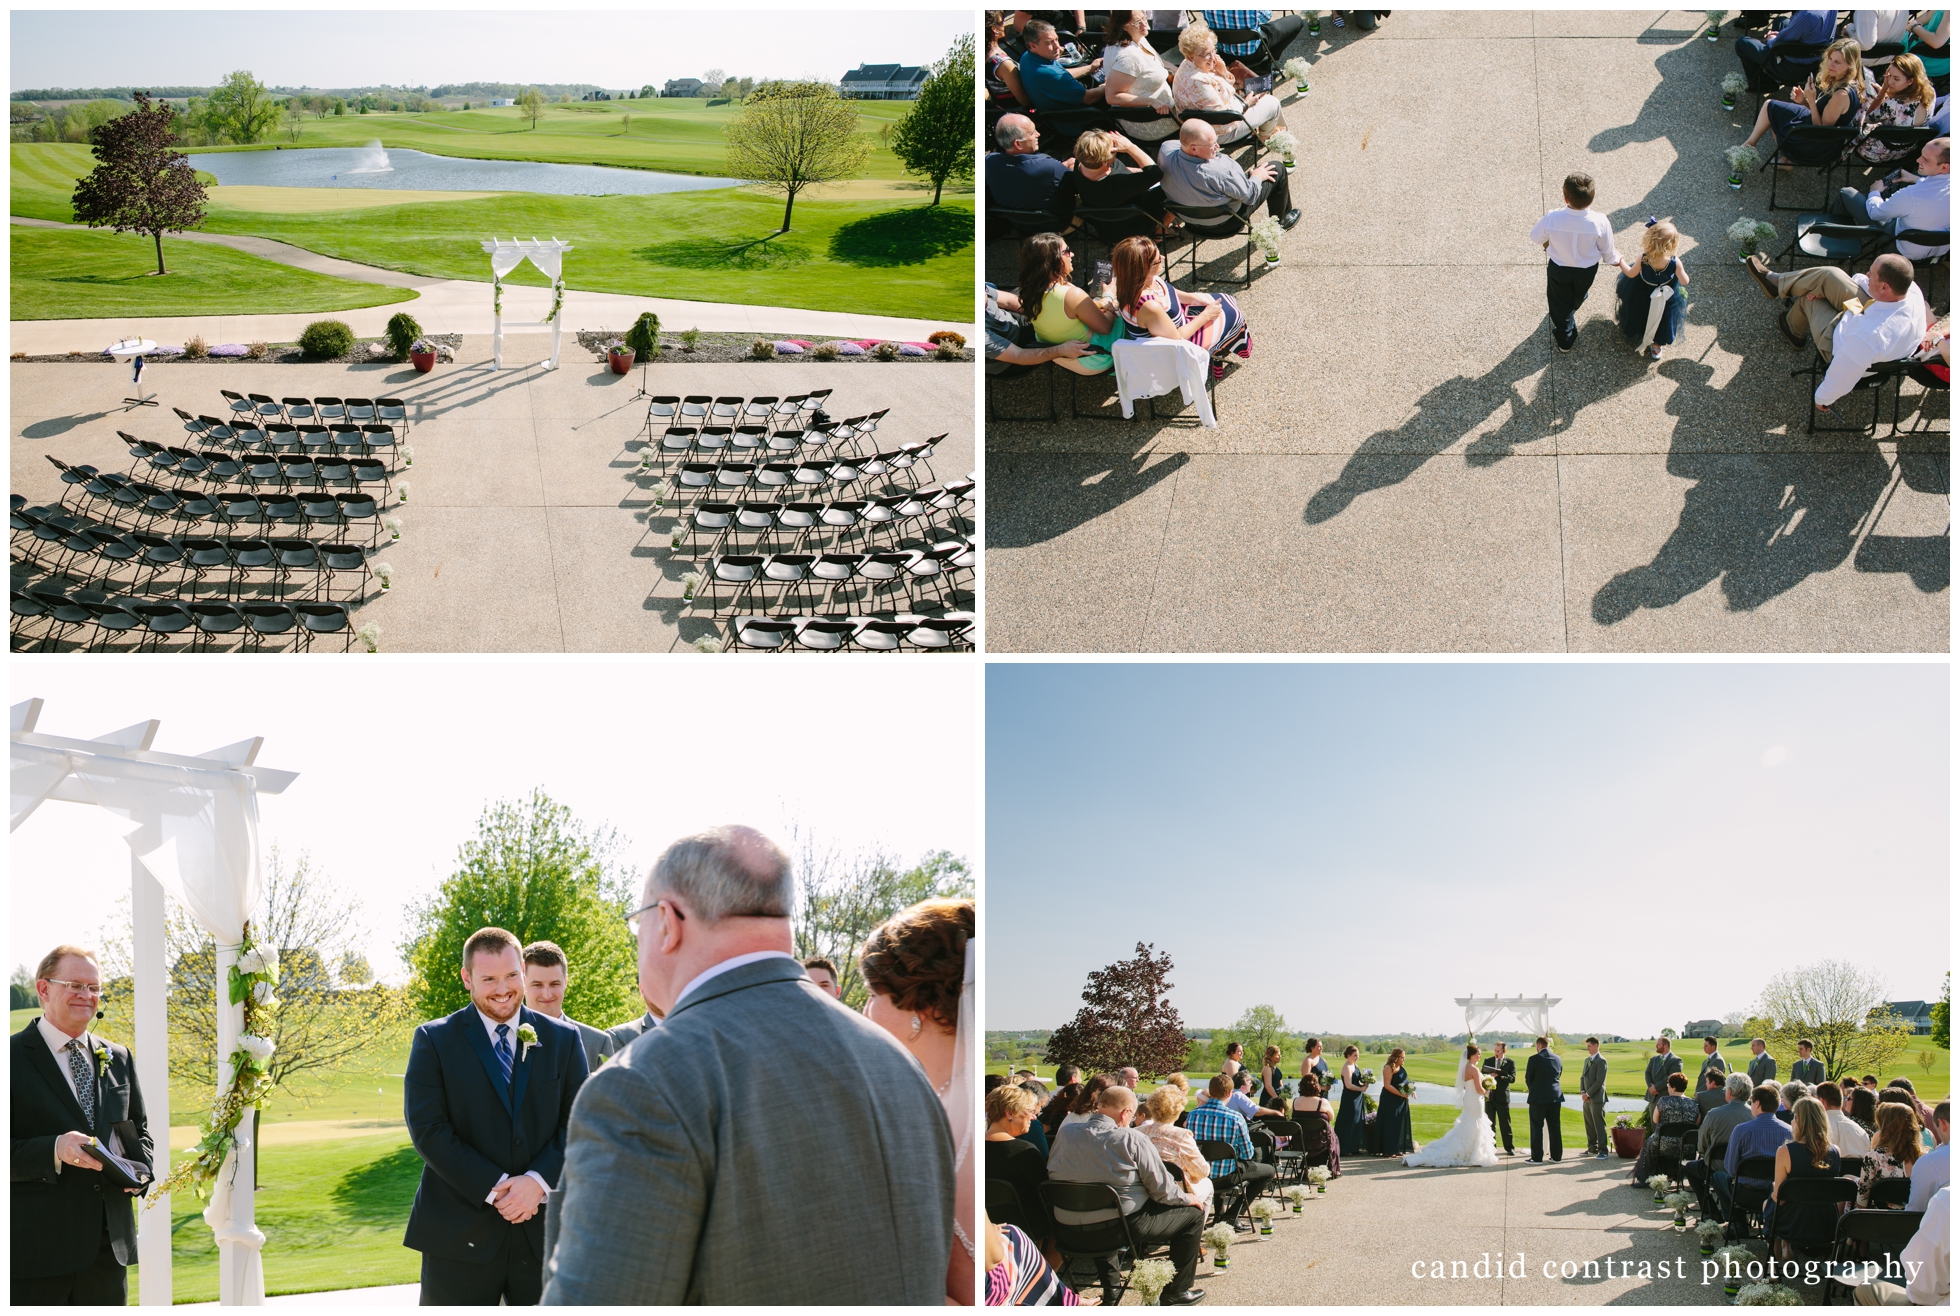 wedding ceremony at the Meadows Golf Club, Dubuque iowa wedding, candid contrast photography